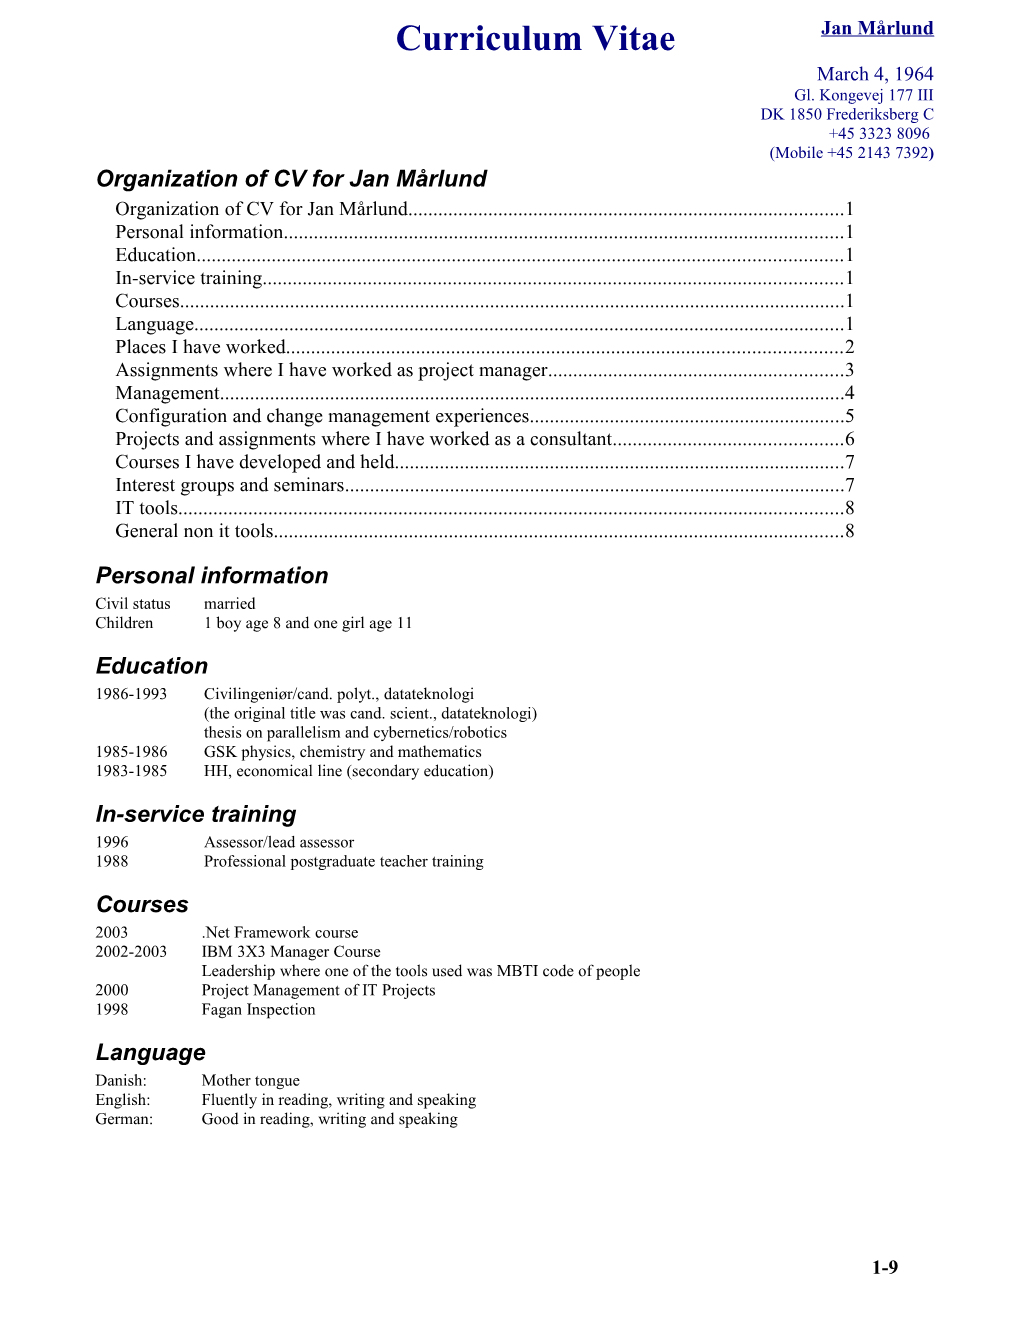 Organization of CV for Jan Mårlund